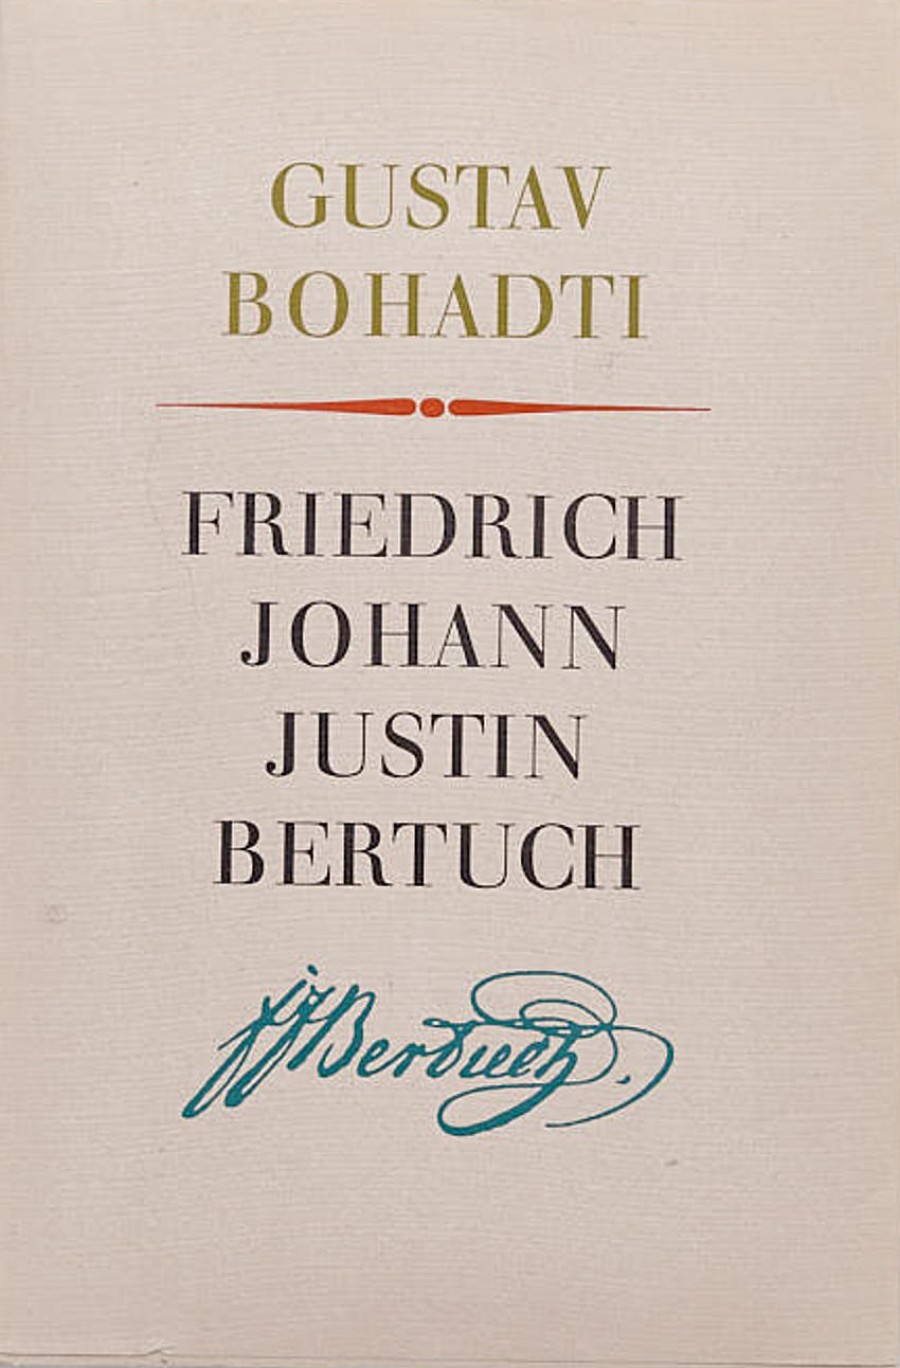 Gustav Bohadti: Friedrich Johann Justin Bertuch